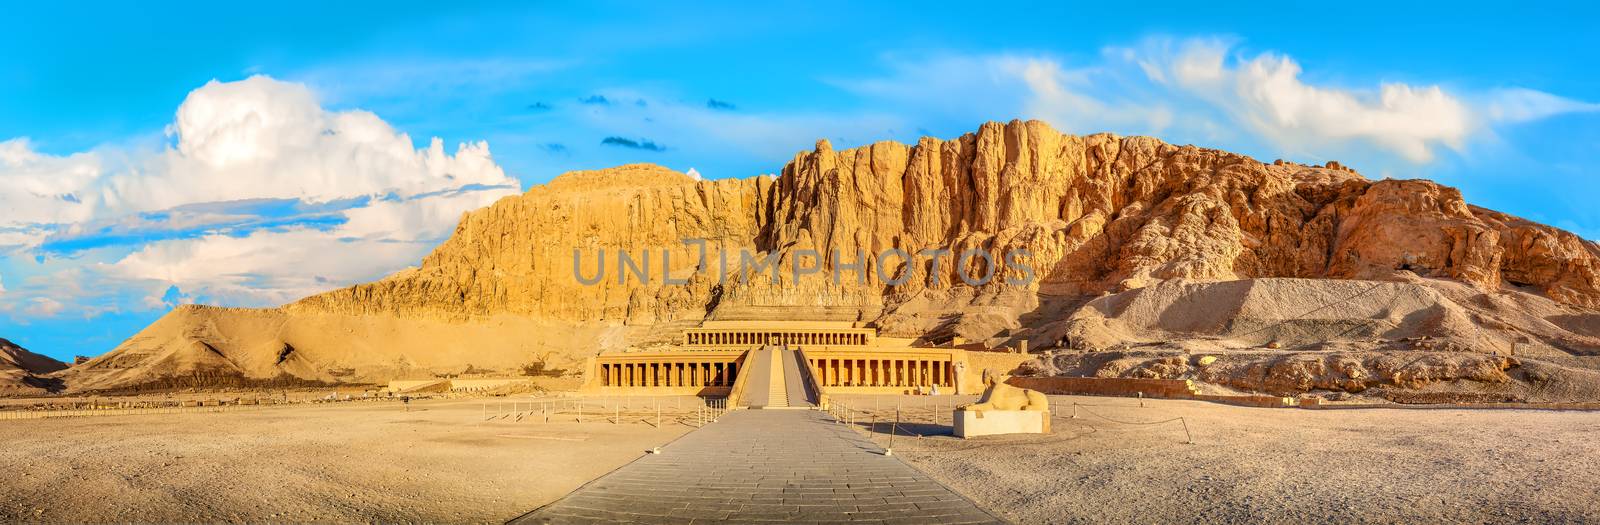 Temple of Hatshepsut by Givaga